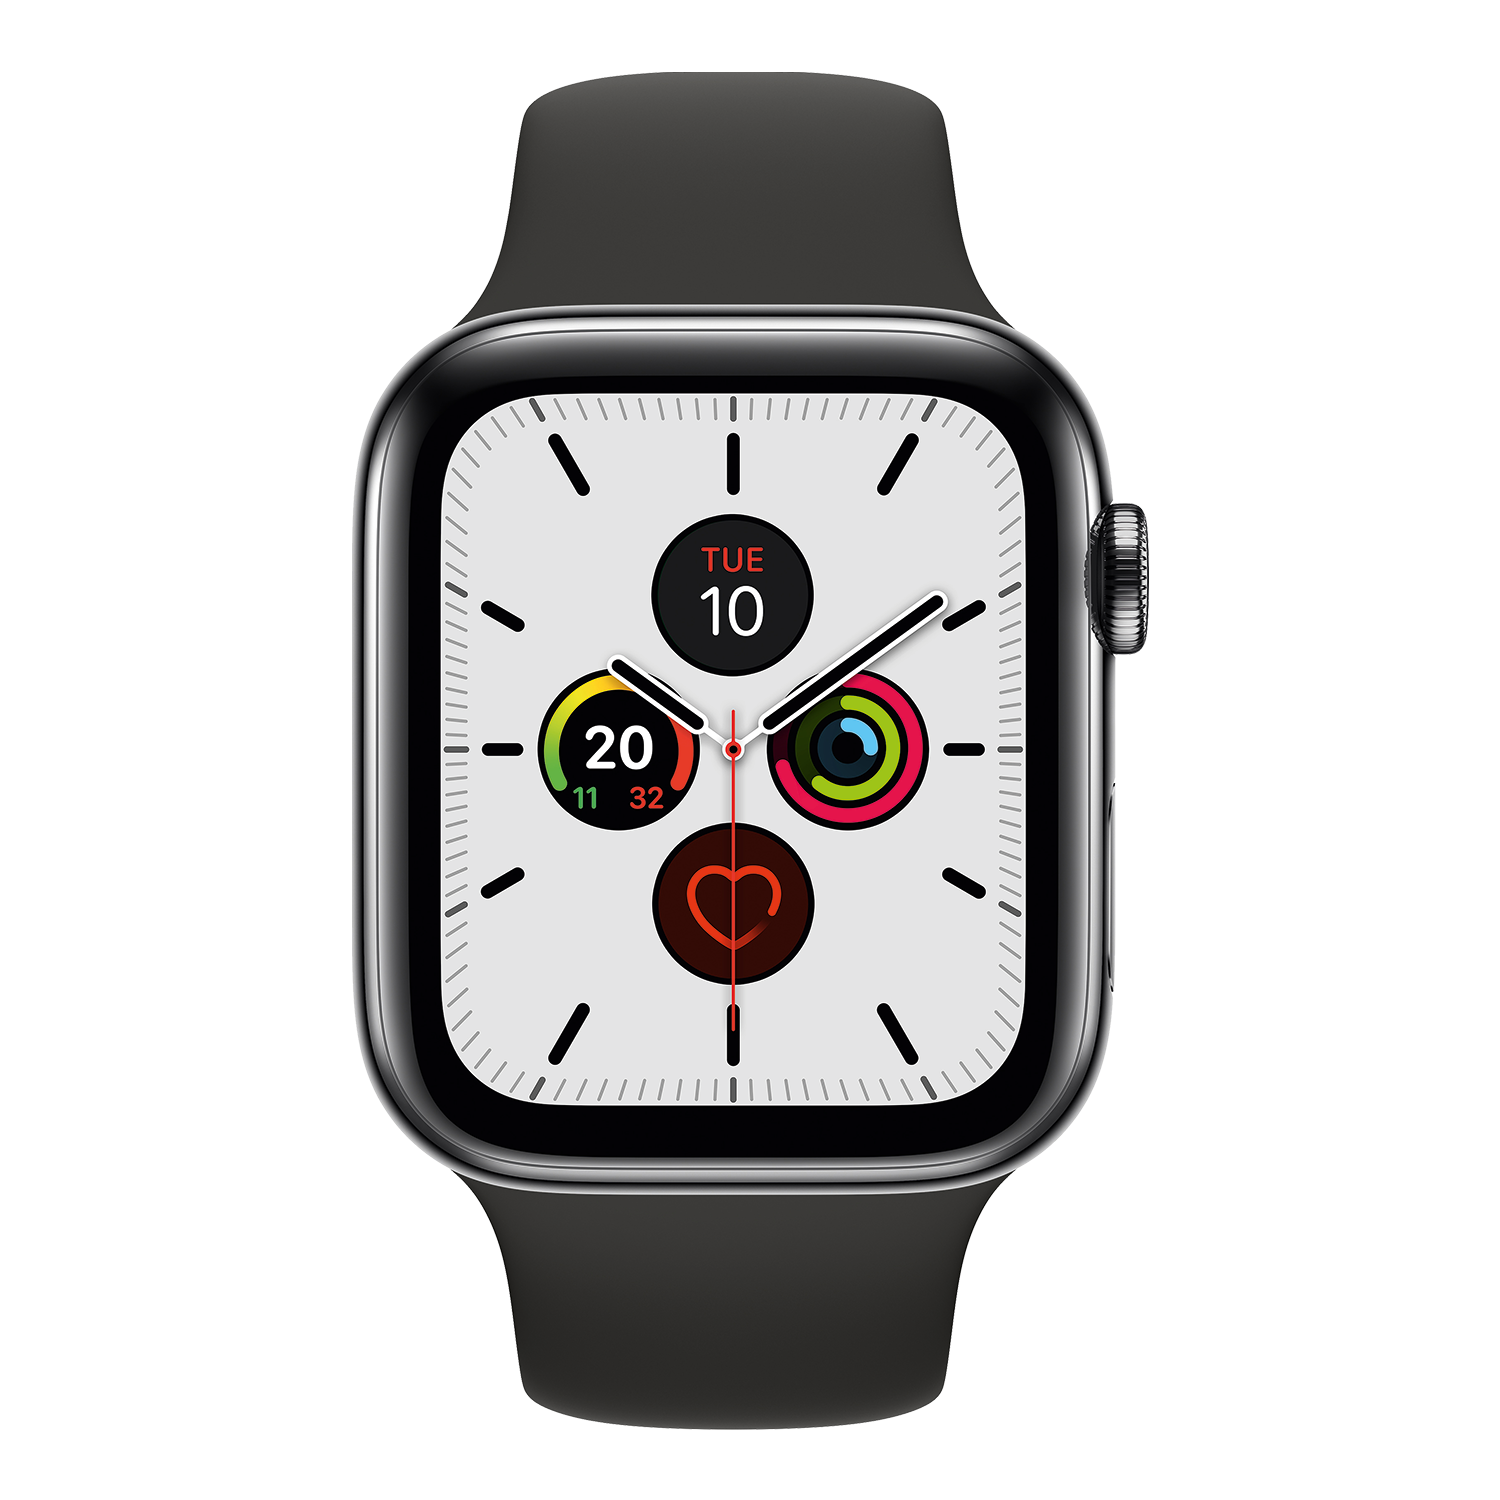 Black Apple Watch Series 6 Transparent Image